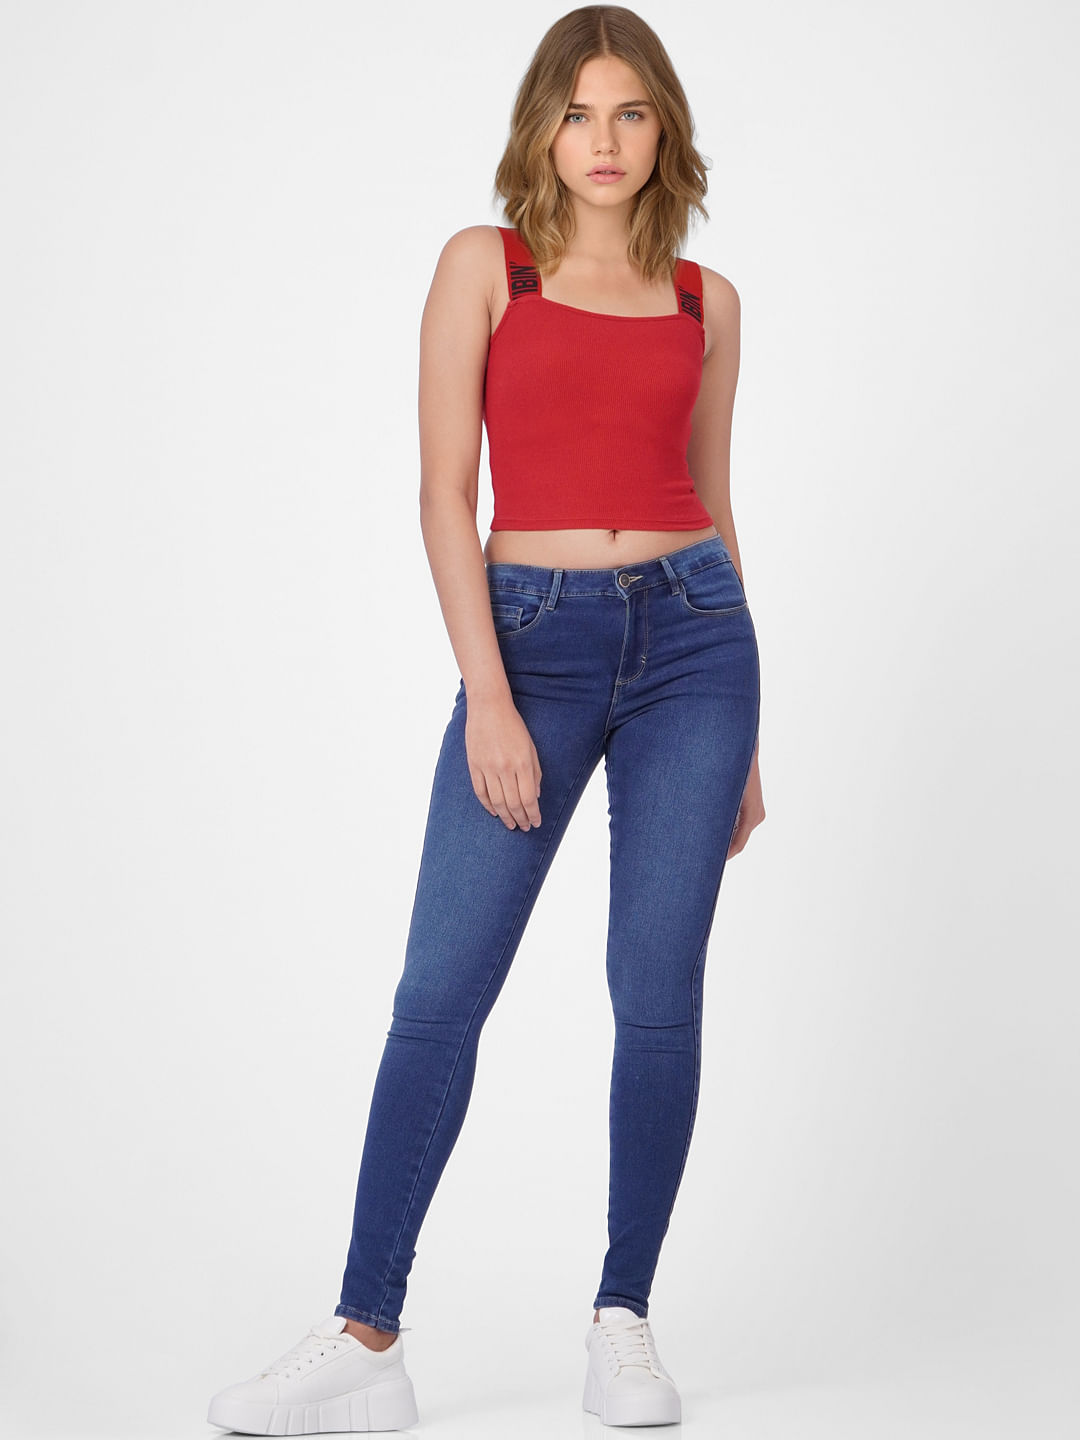 Green 34                  EU discount 98% H&M Jeggings & Skinny & Slim WOMEN FASHION Jeans NO STYLE 